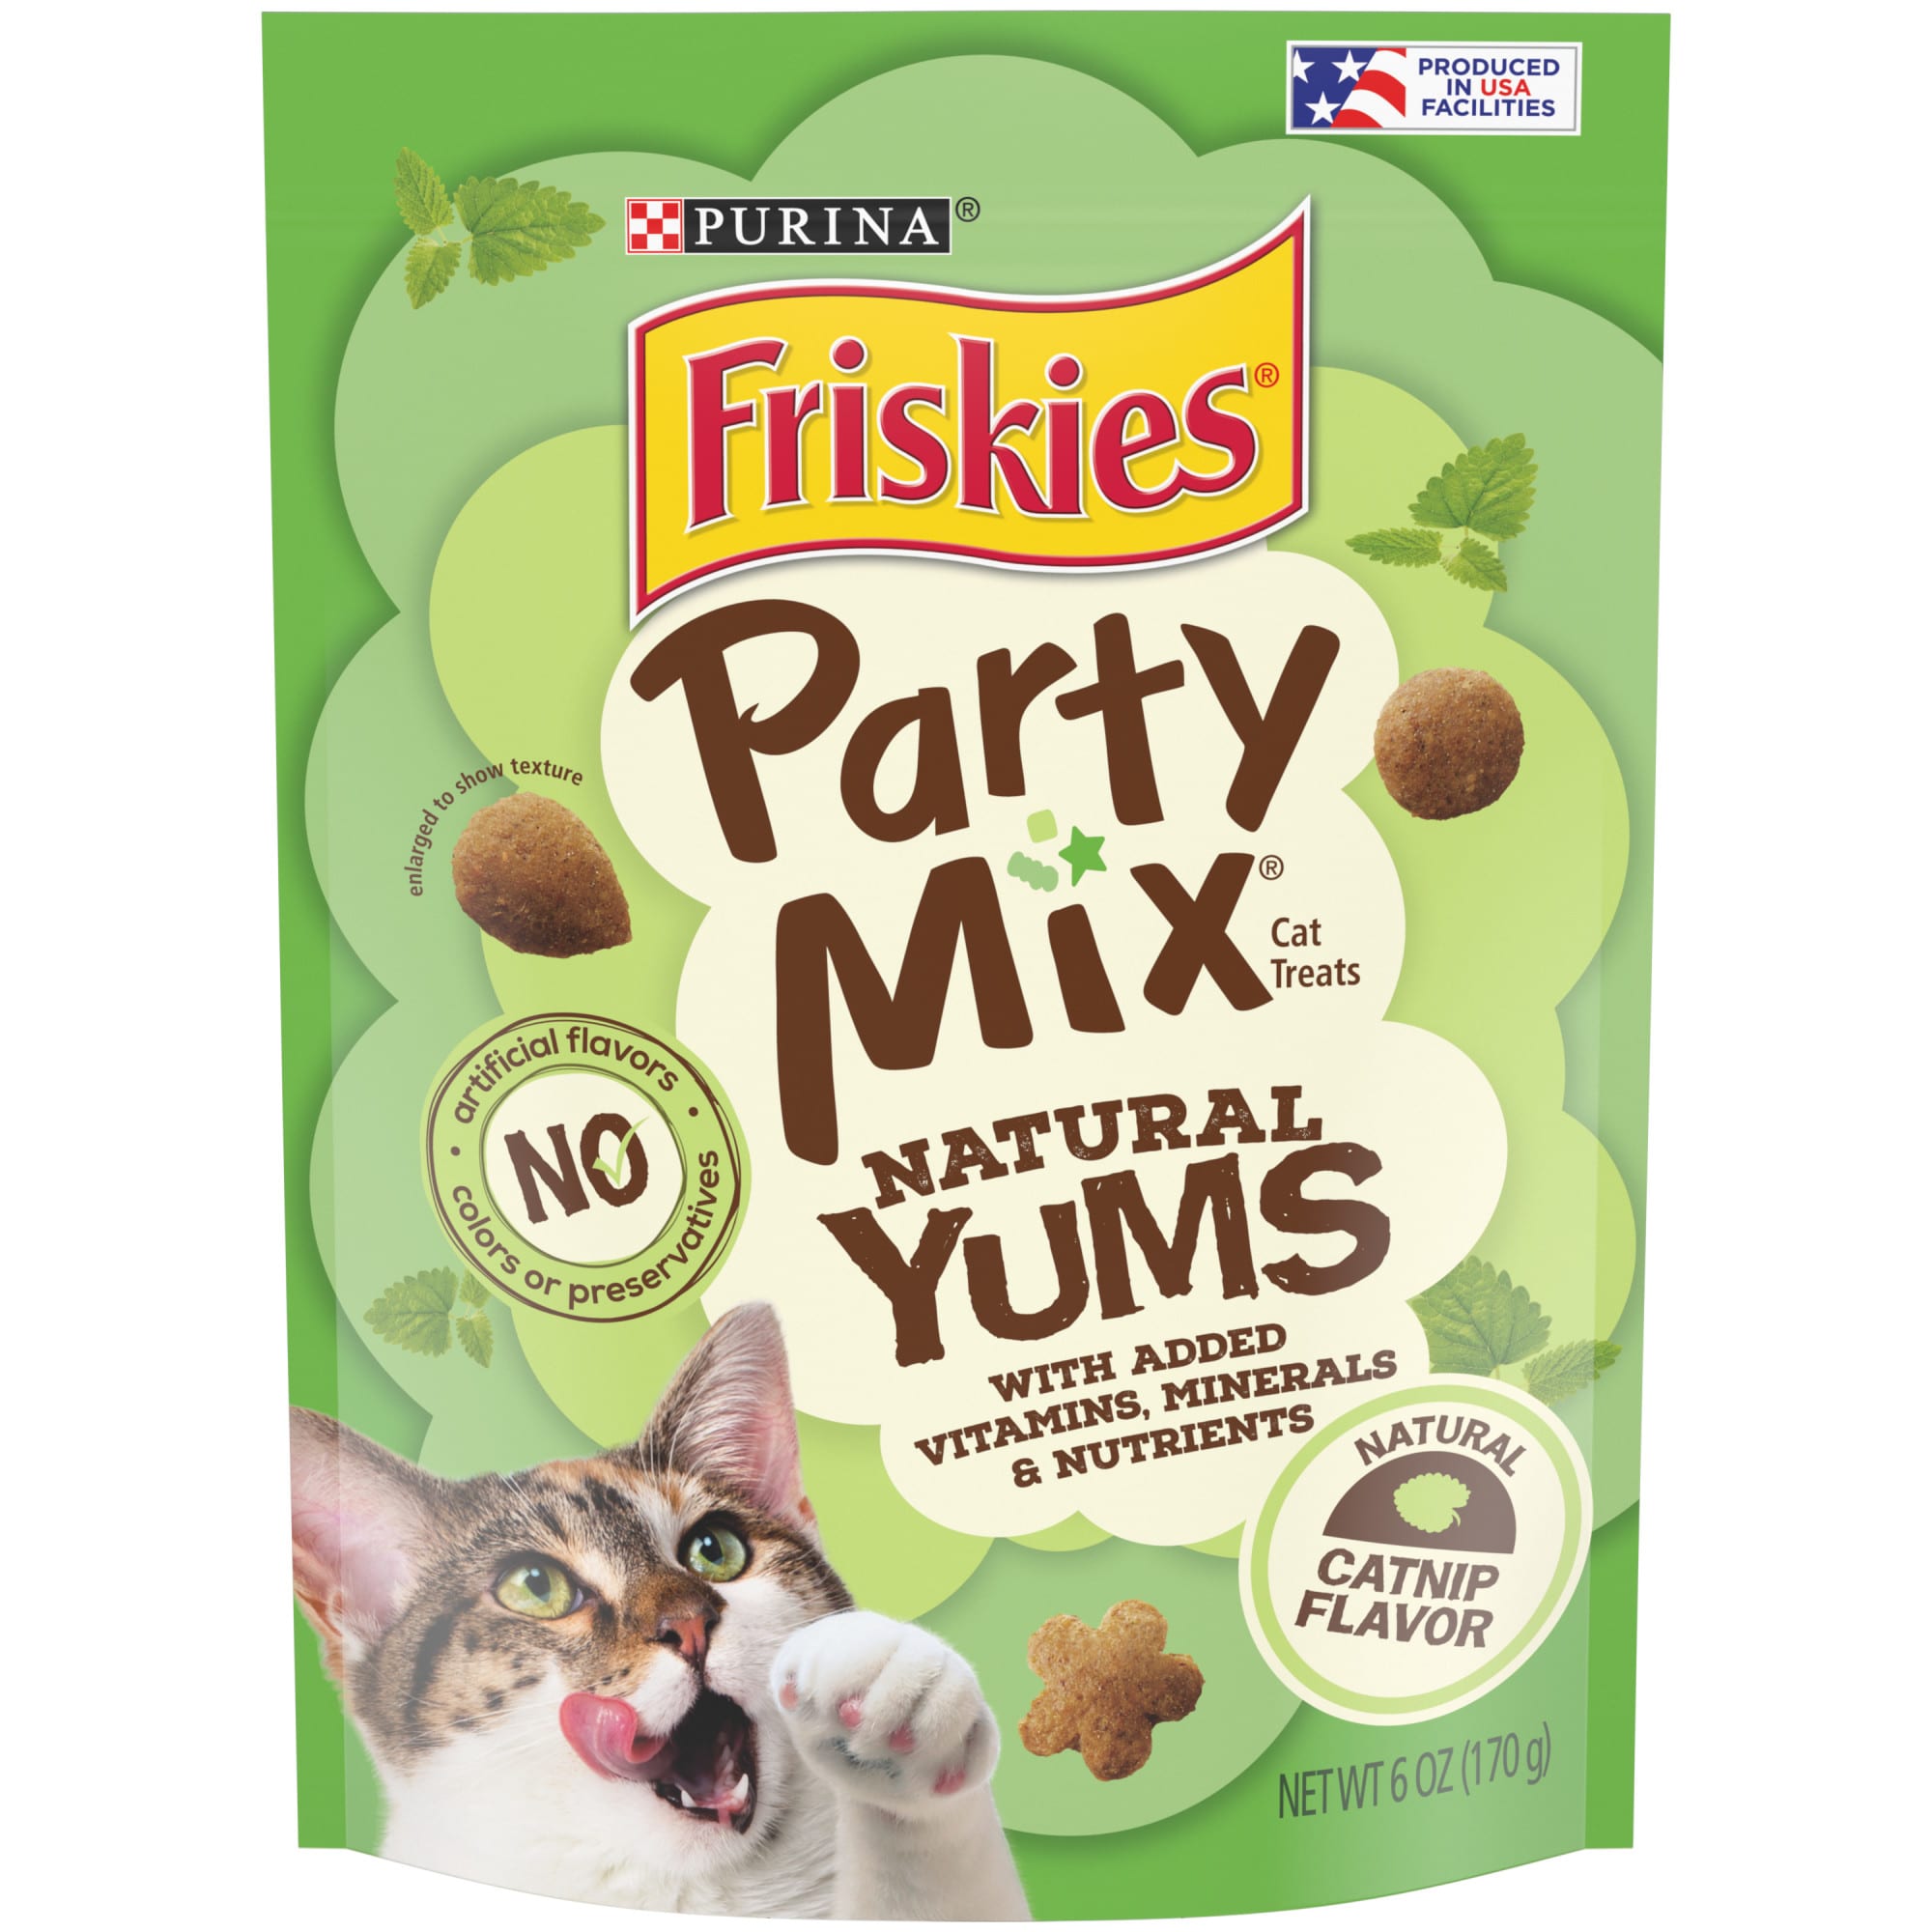 can dogs eat friskies cat treats